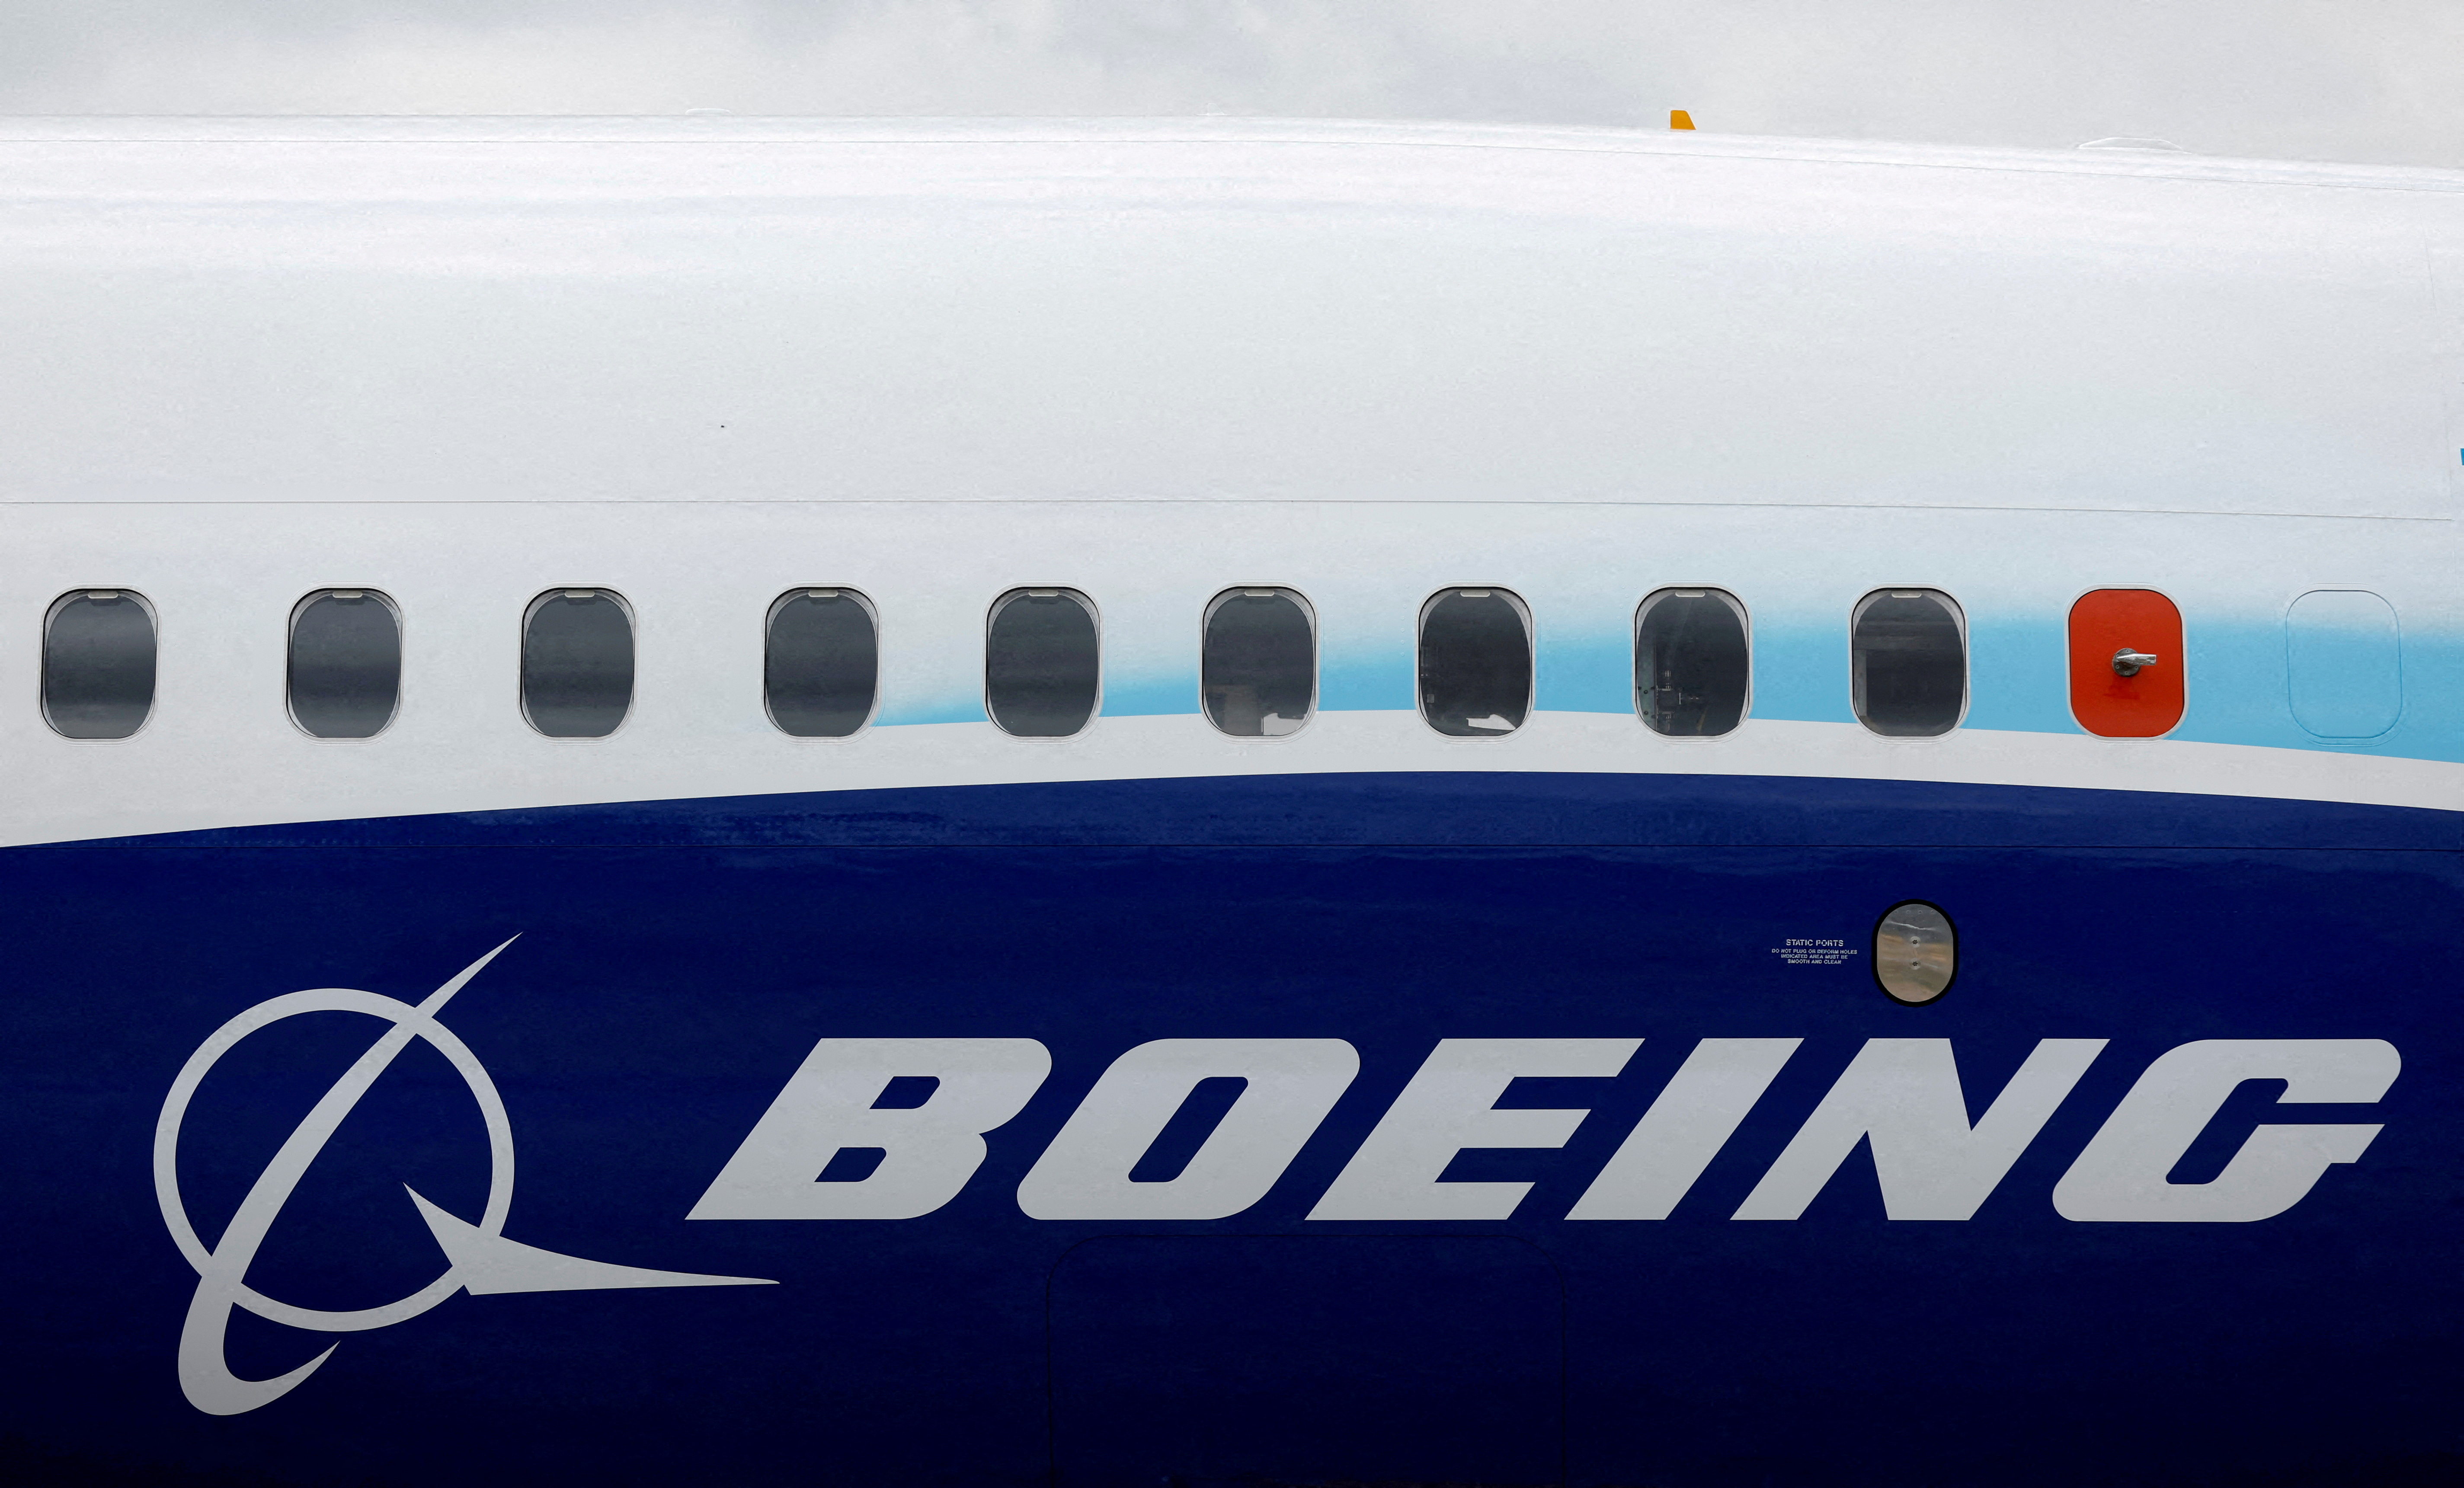 The Boeing logo